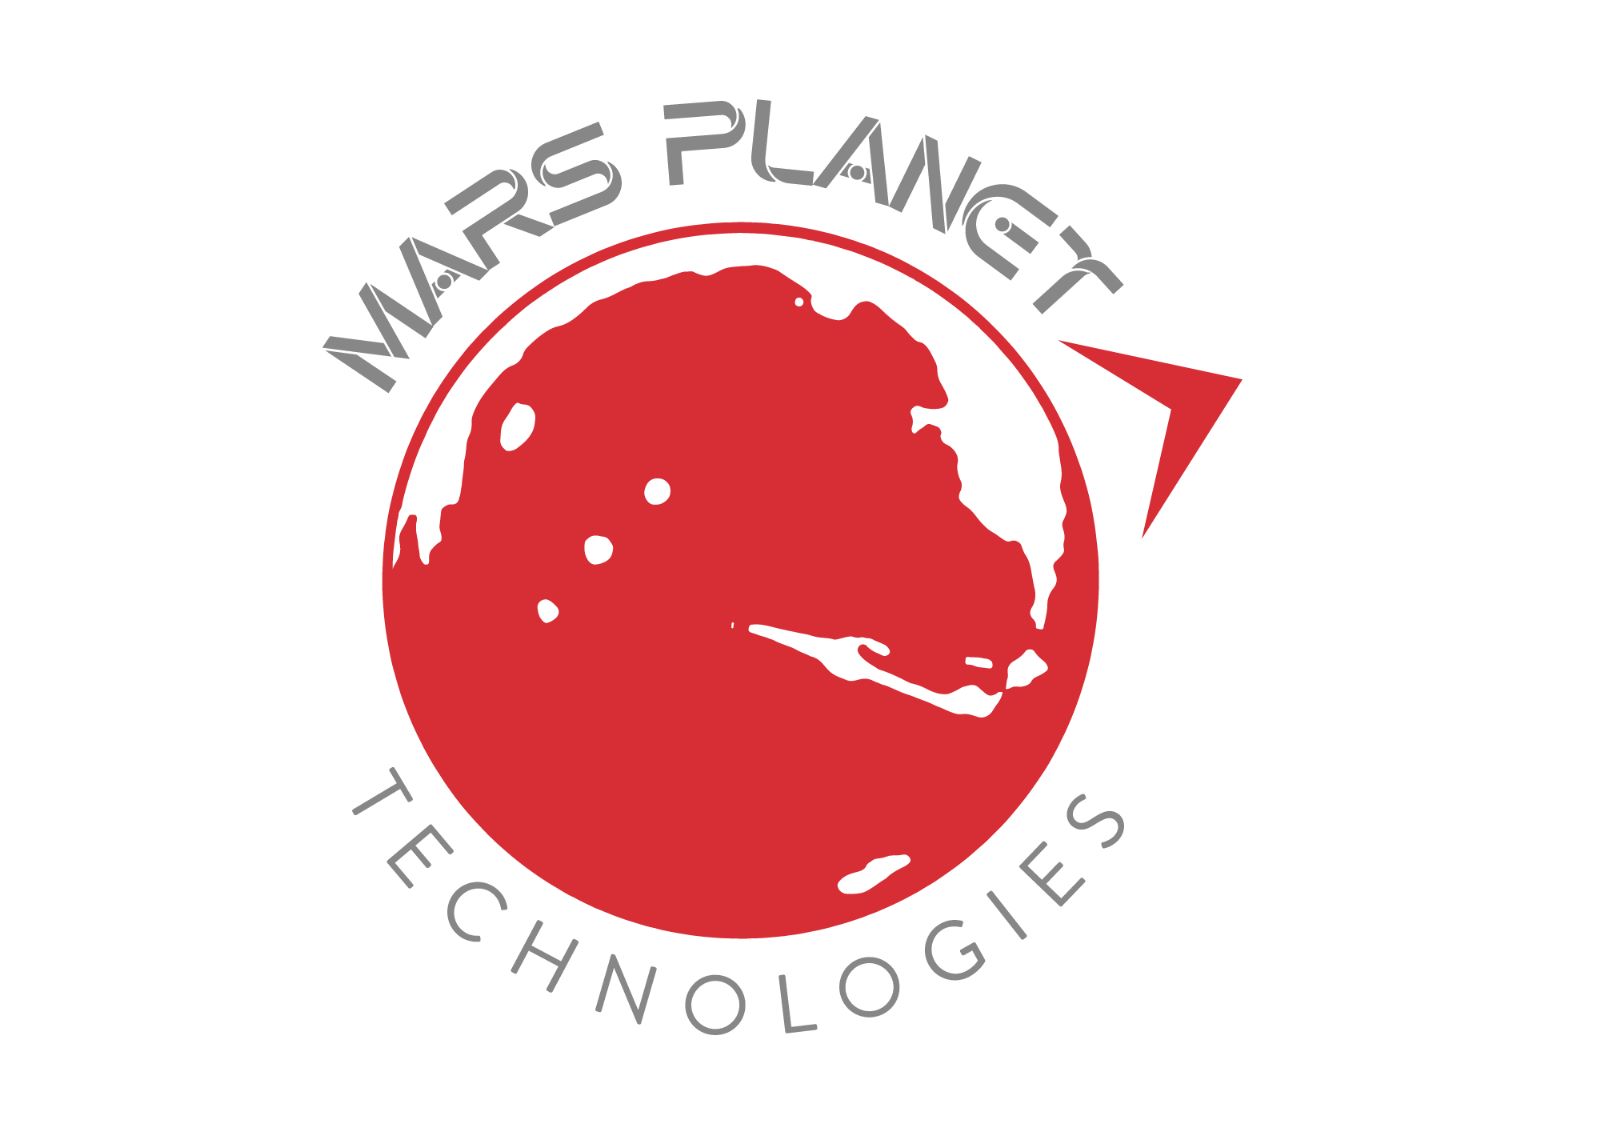 (c) Marsplanet.org